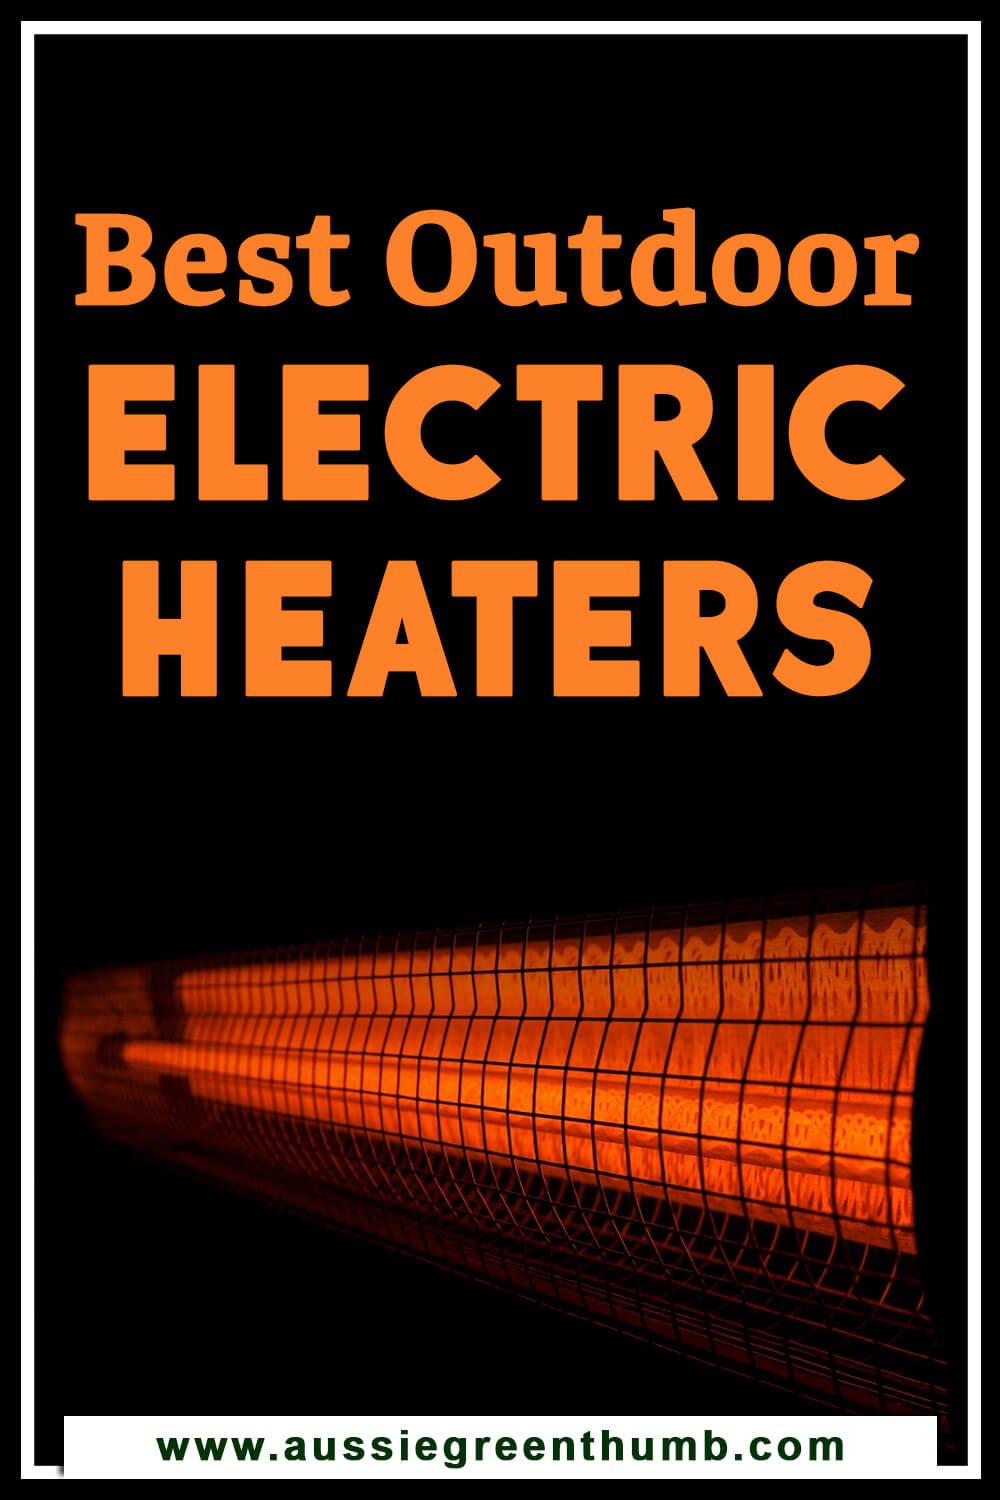 Best Outdoor Electric Heaters